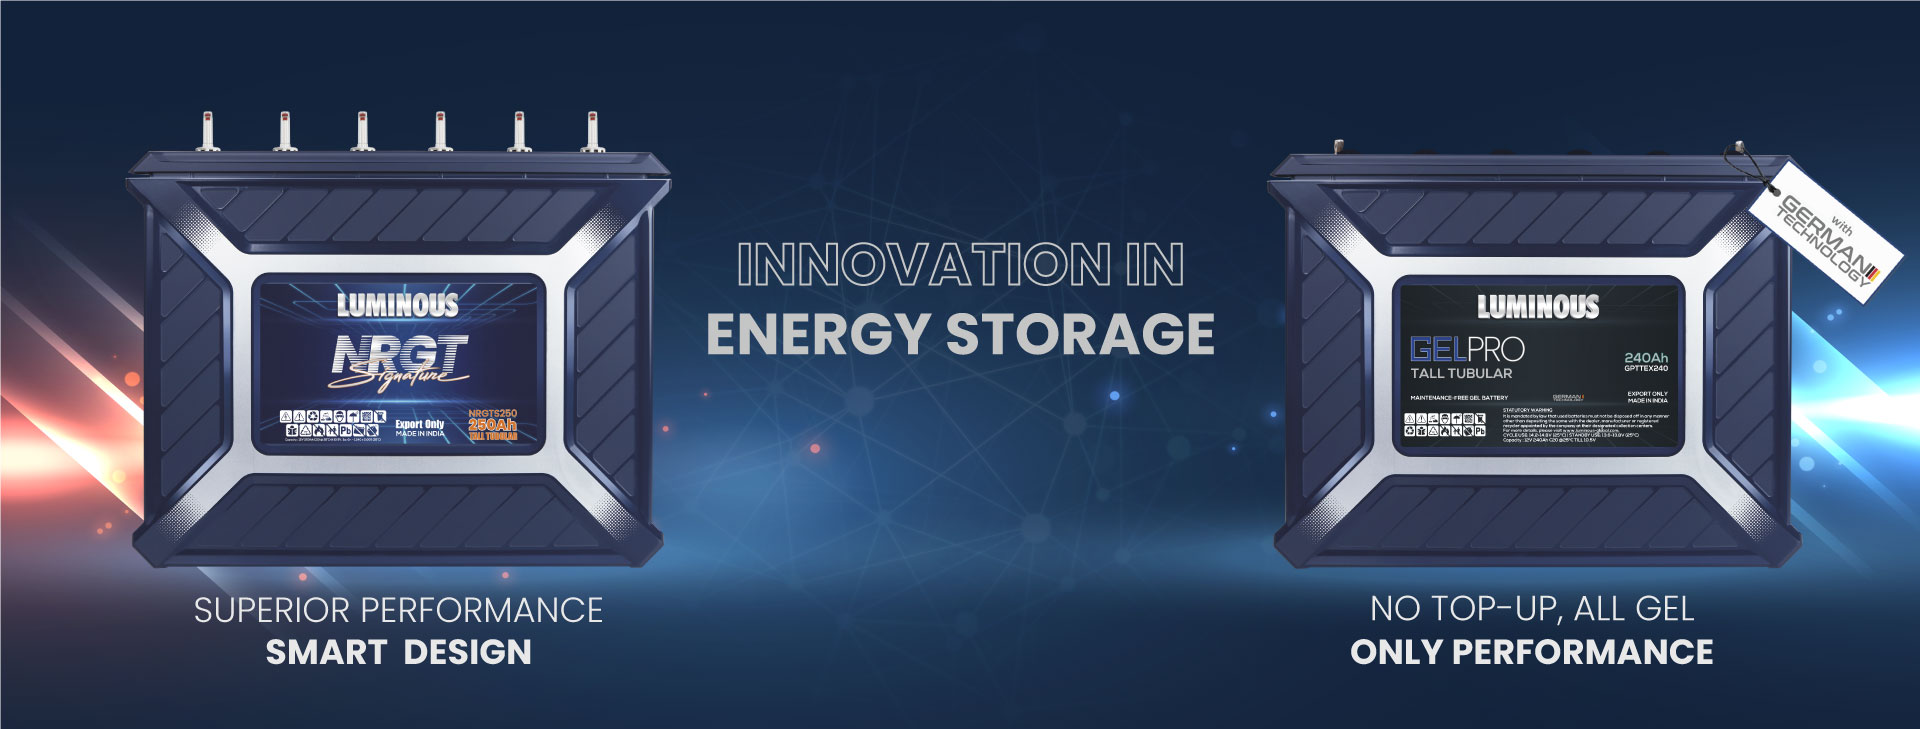 Luminous Energy Storage